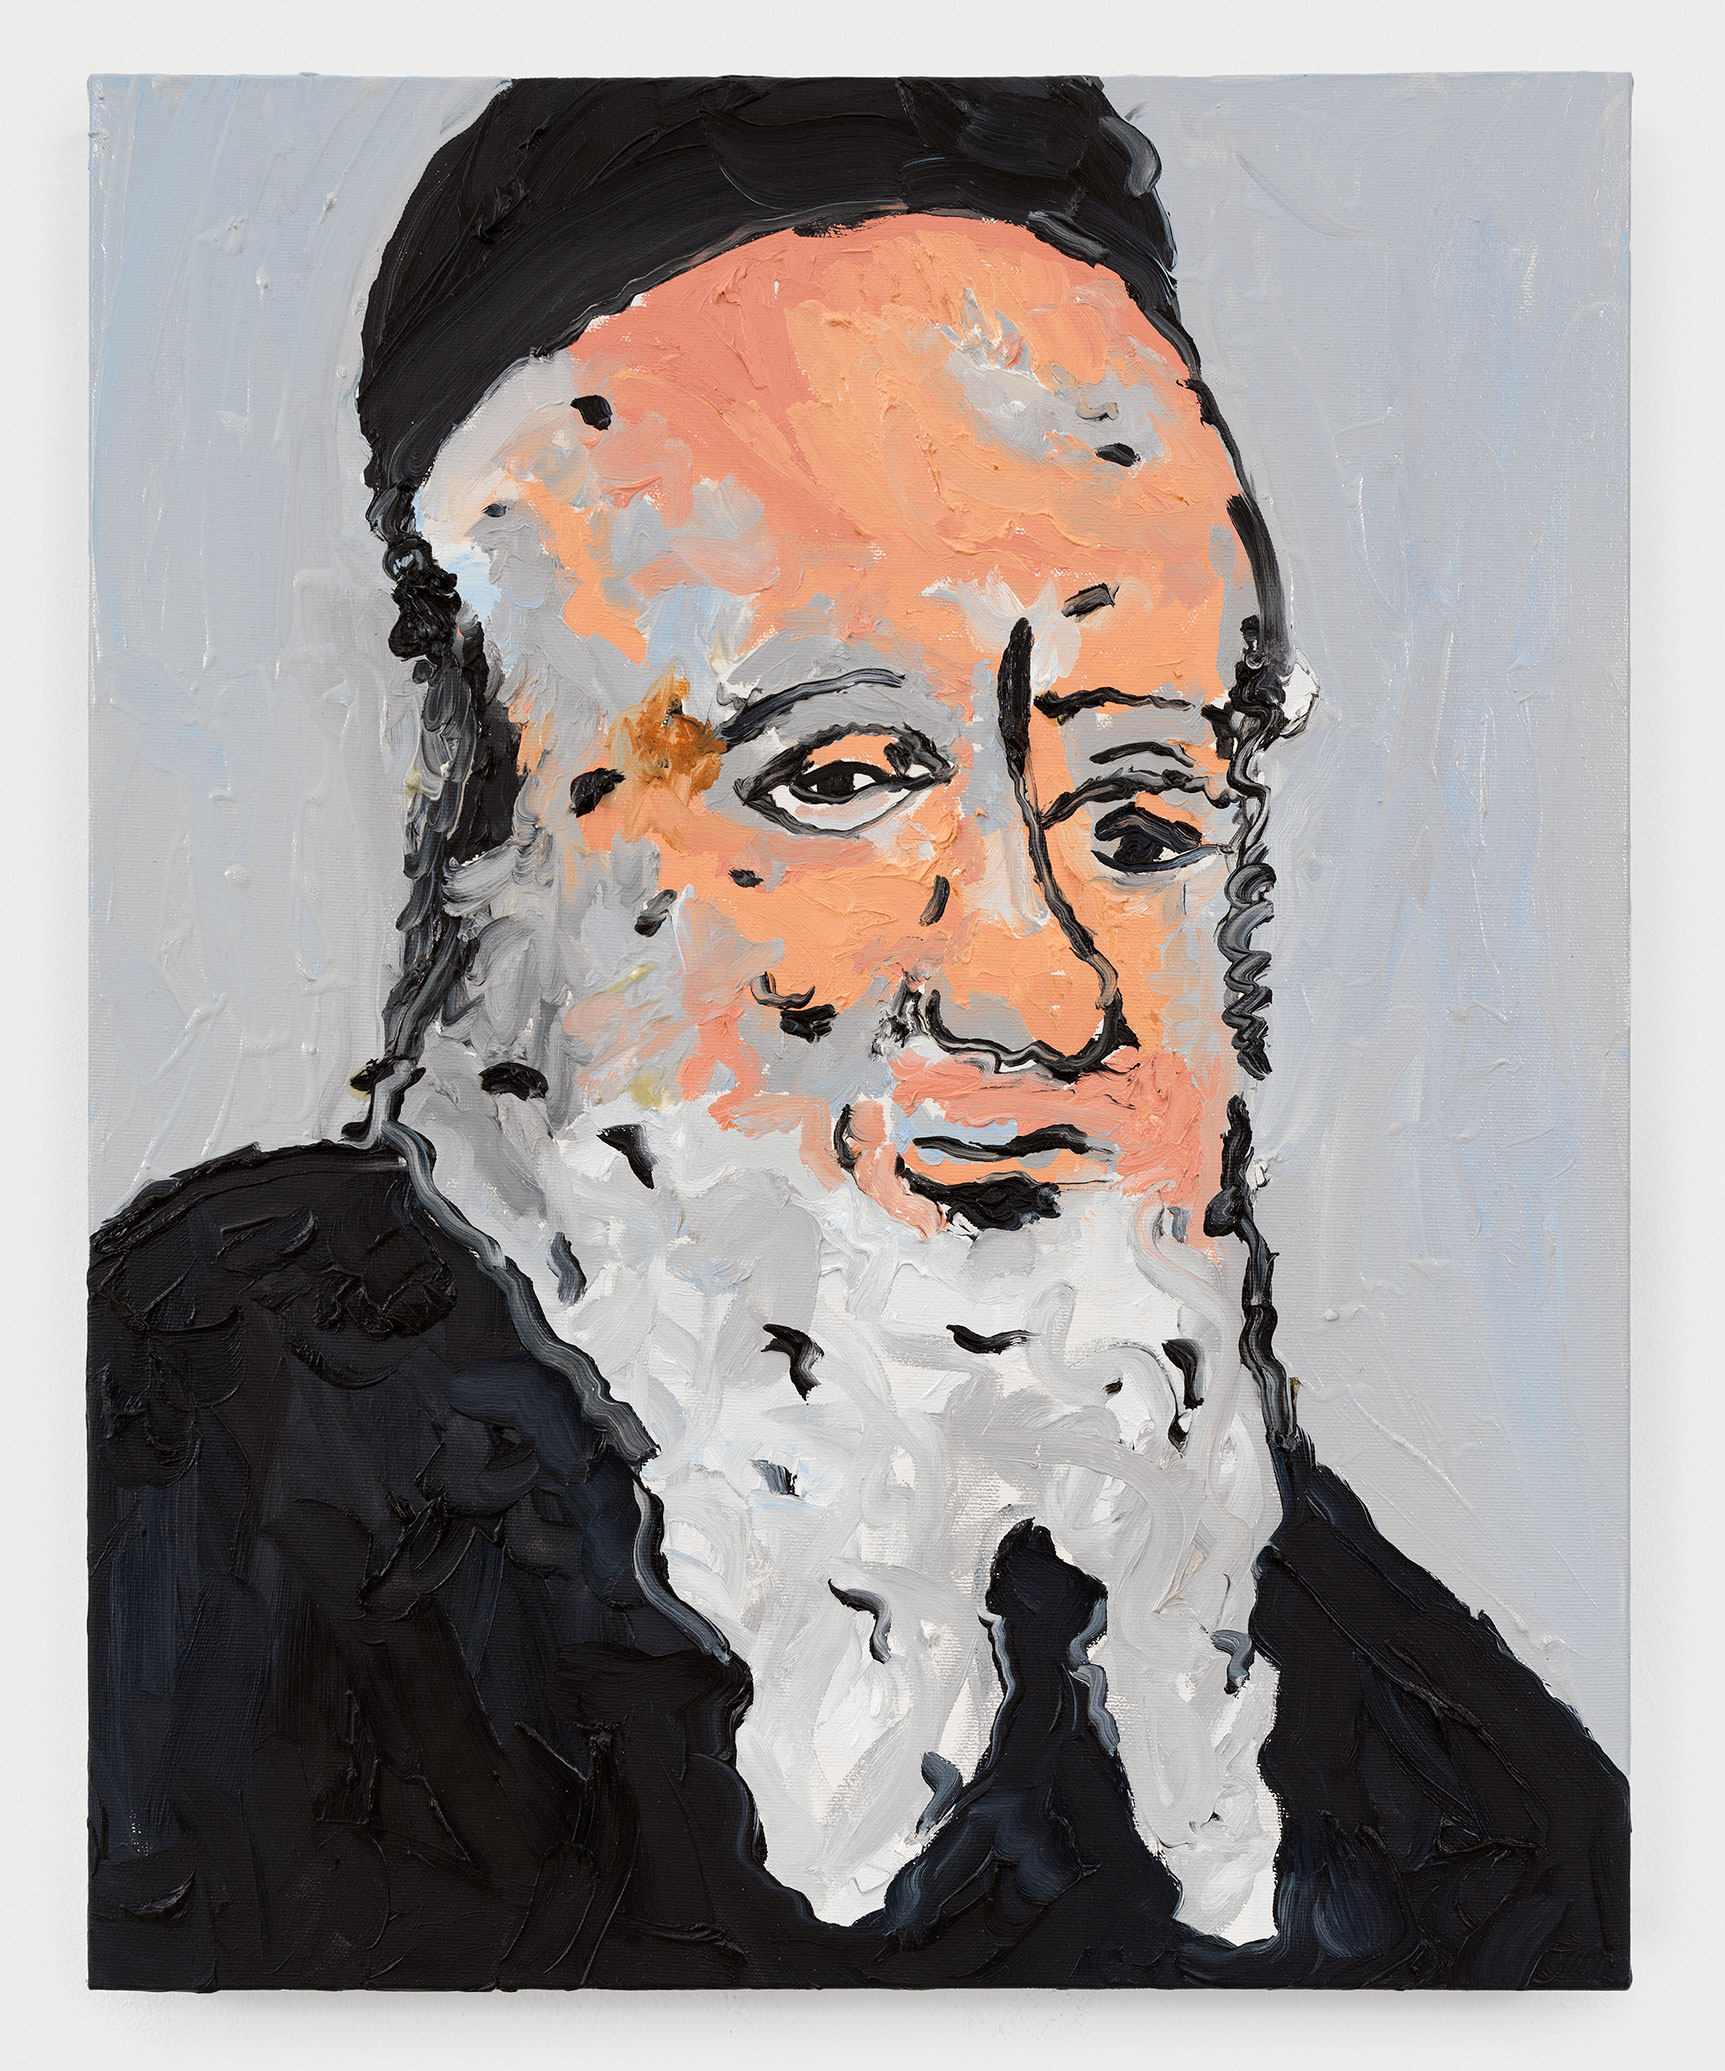 Rabbi